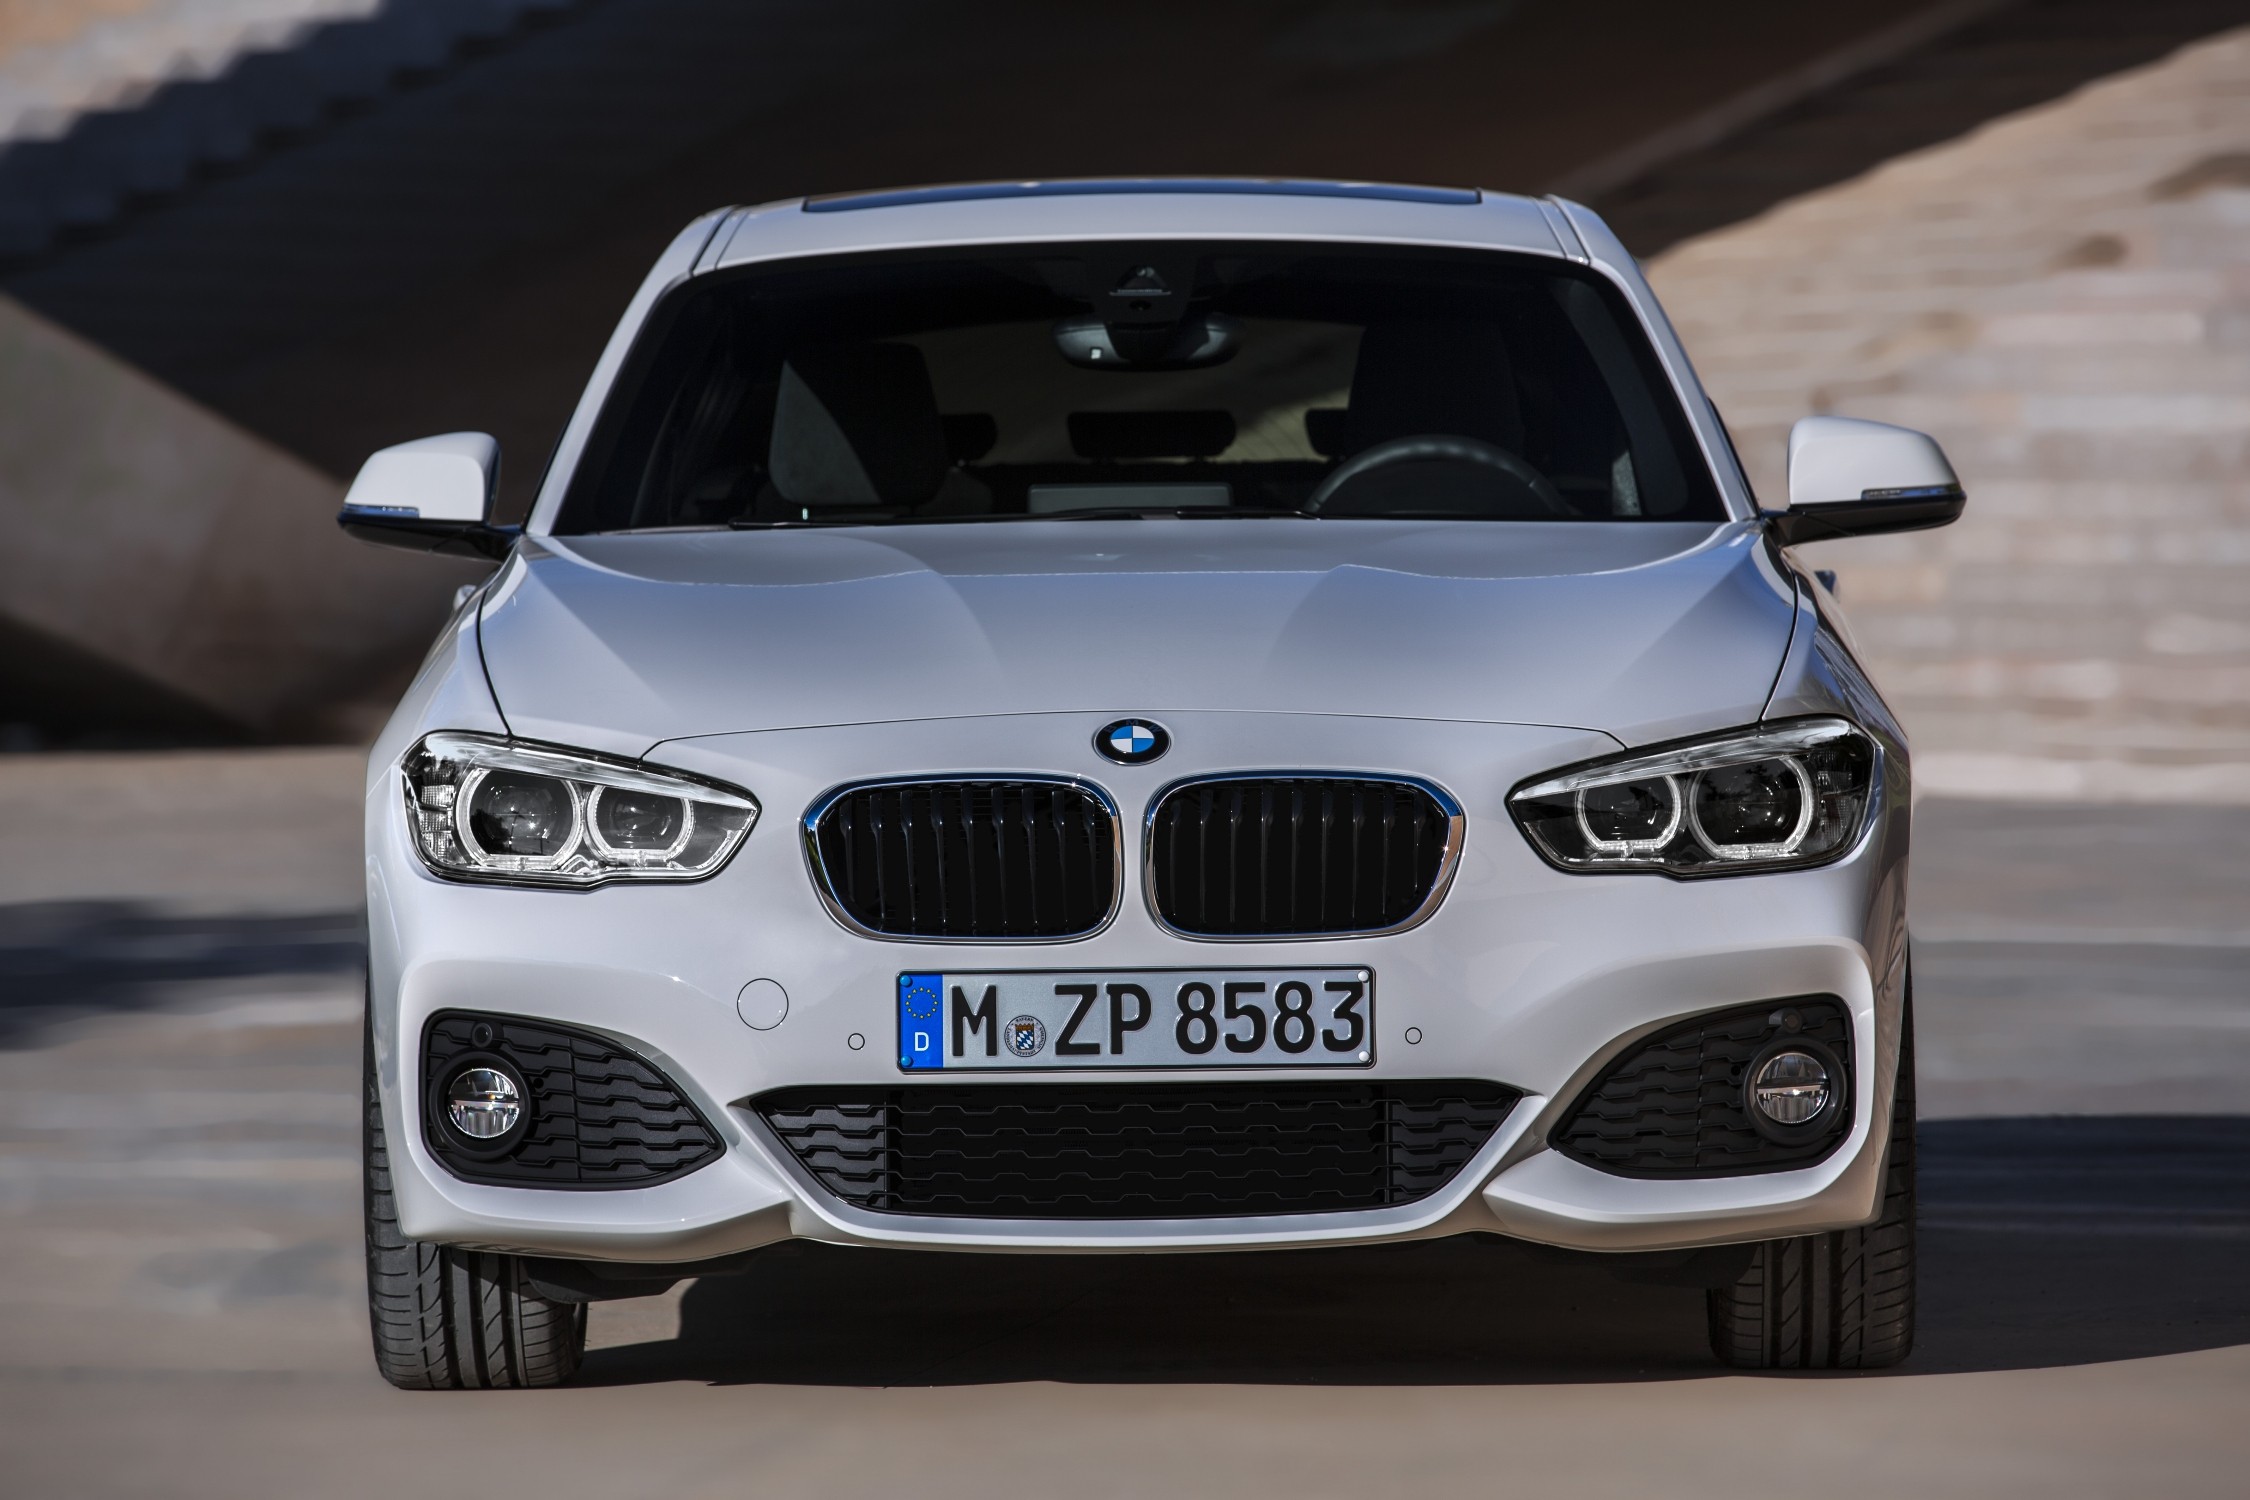 New BMW 1-Series 2015 Facelift BMW 1er driving shots exterior